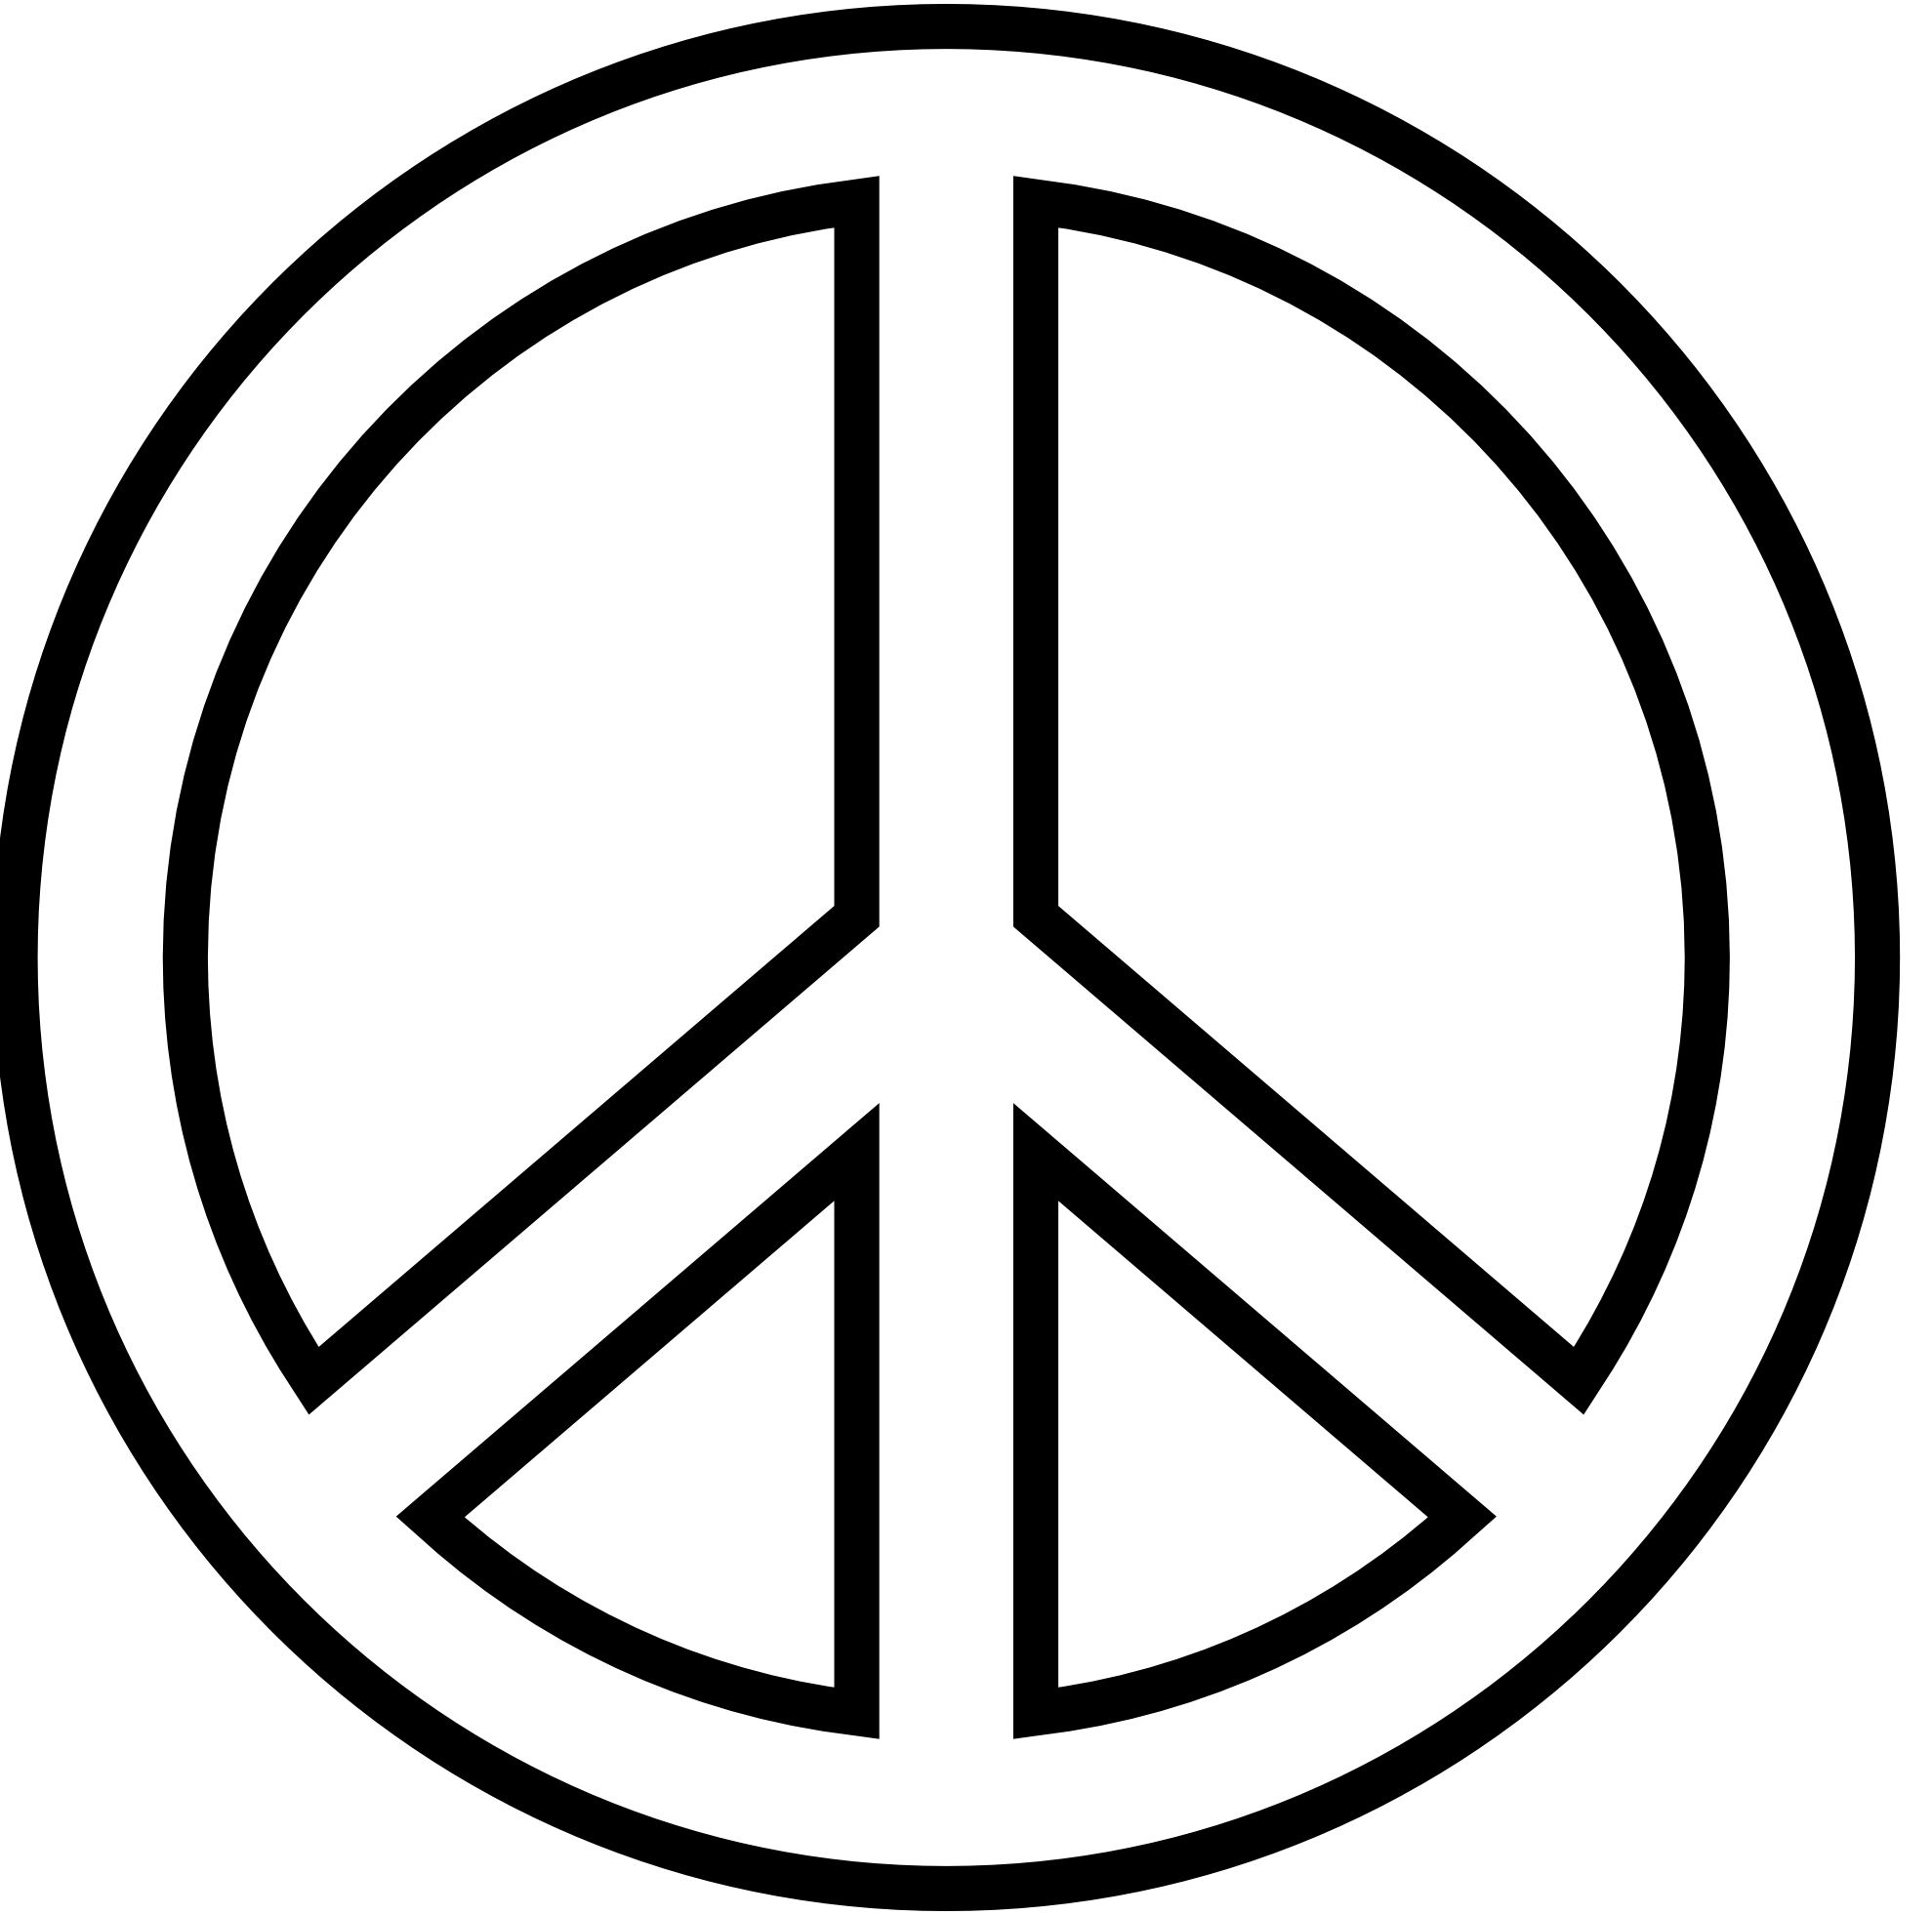 Peace Sign Logo - Free Peace Sign Clip Art, Download Free Clip Art, Free Clip Art on ...